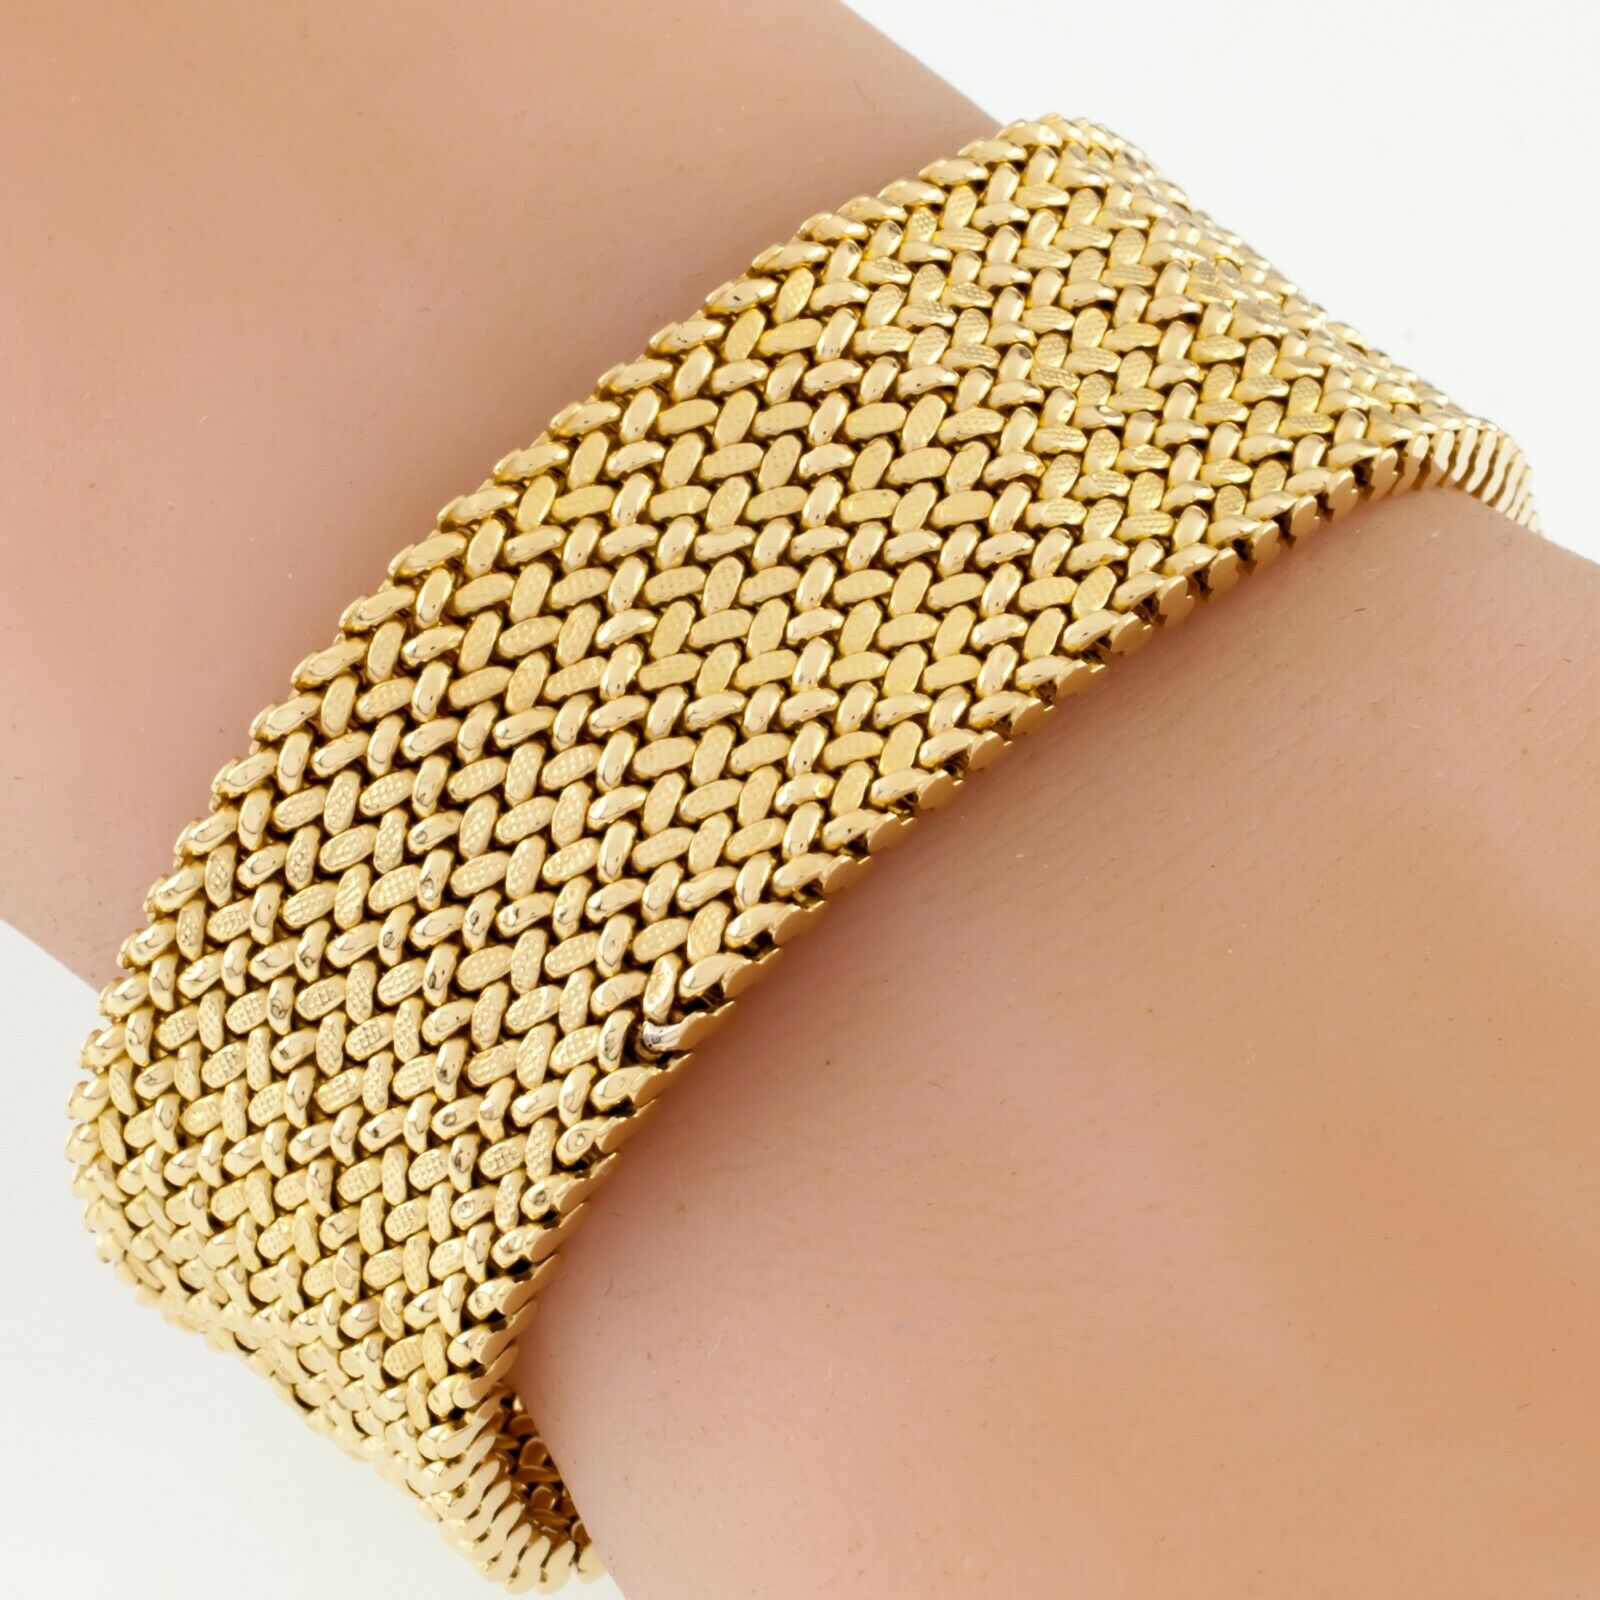 18k Gold 'LV' Volt Mesh Bracelet, Authentic & Vintage